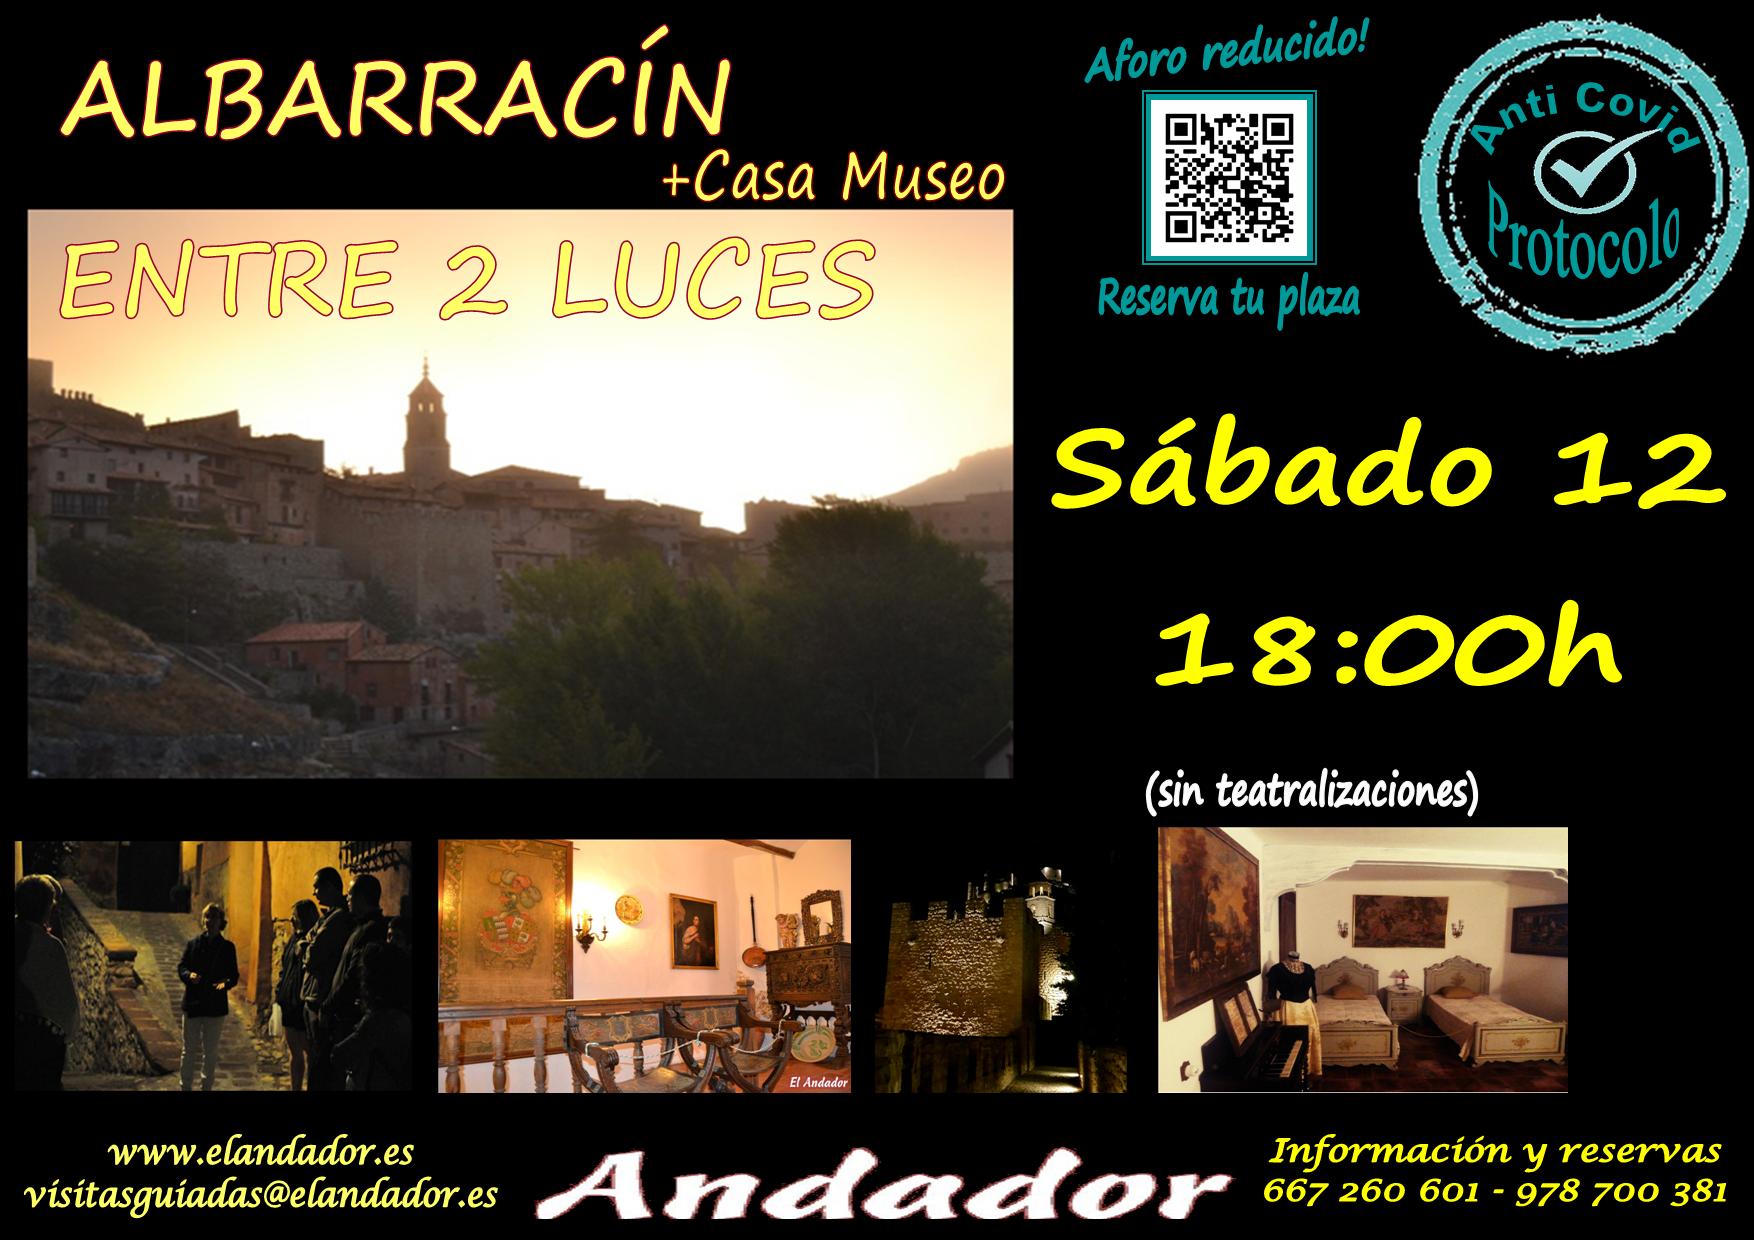 Este sábado 12 de Febrero… Visita Guiada en Albarracín Entre 2 Luces + Casa Museo! Reserva tu plaza!